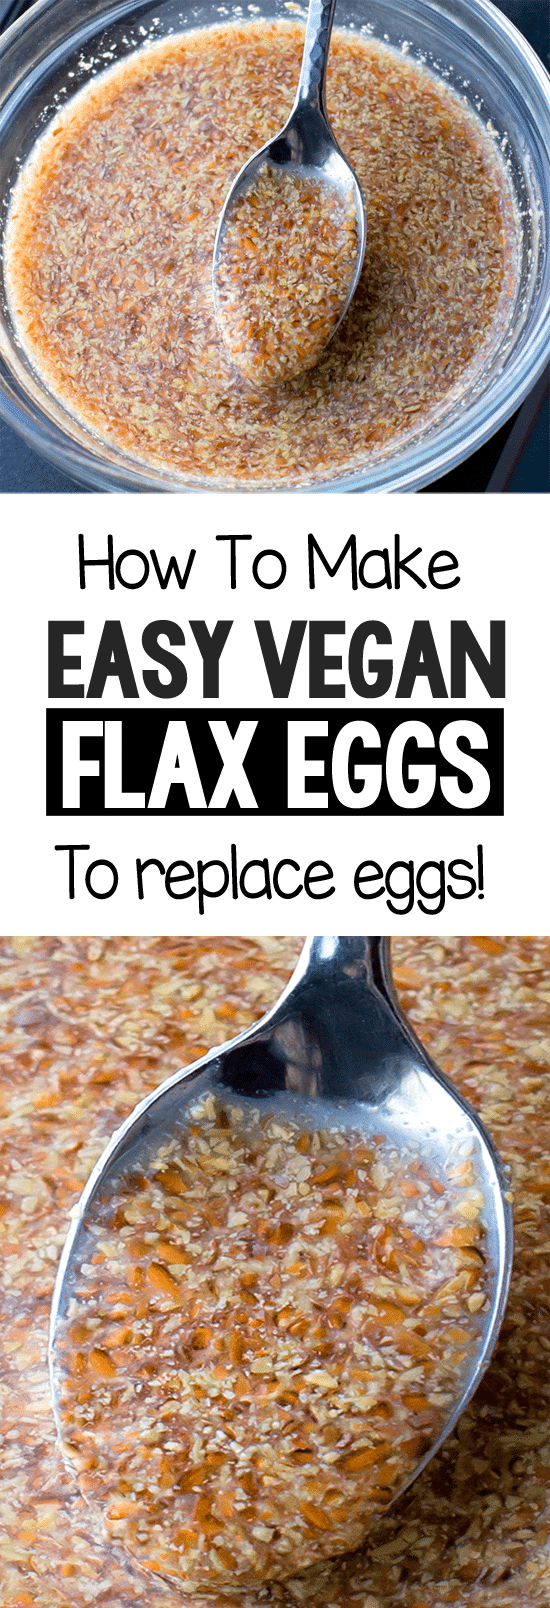 How To Make A Vegan Flax Egg The Easy Recipe